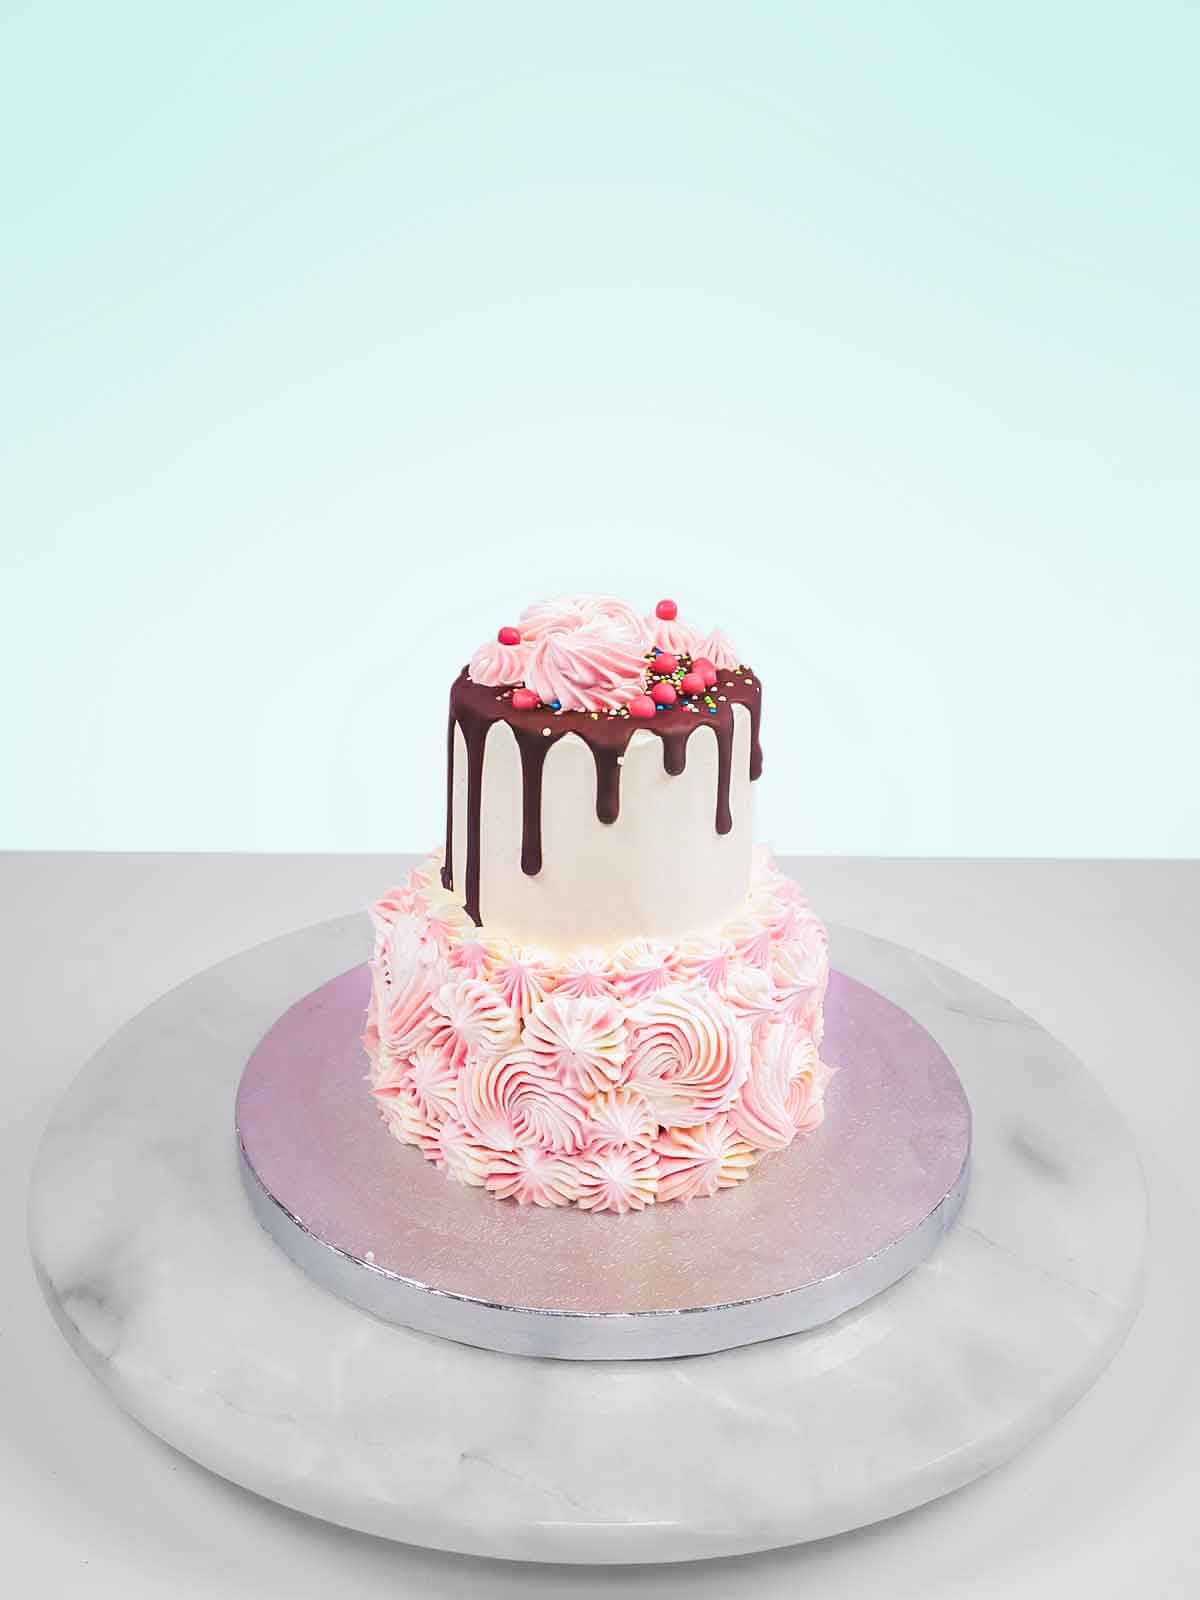 Create your own Birthday Cake - Nata & Co